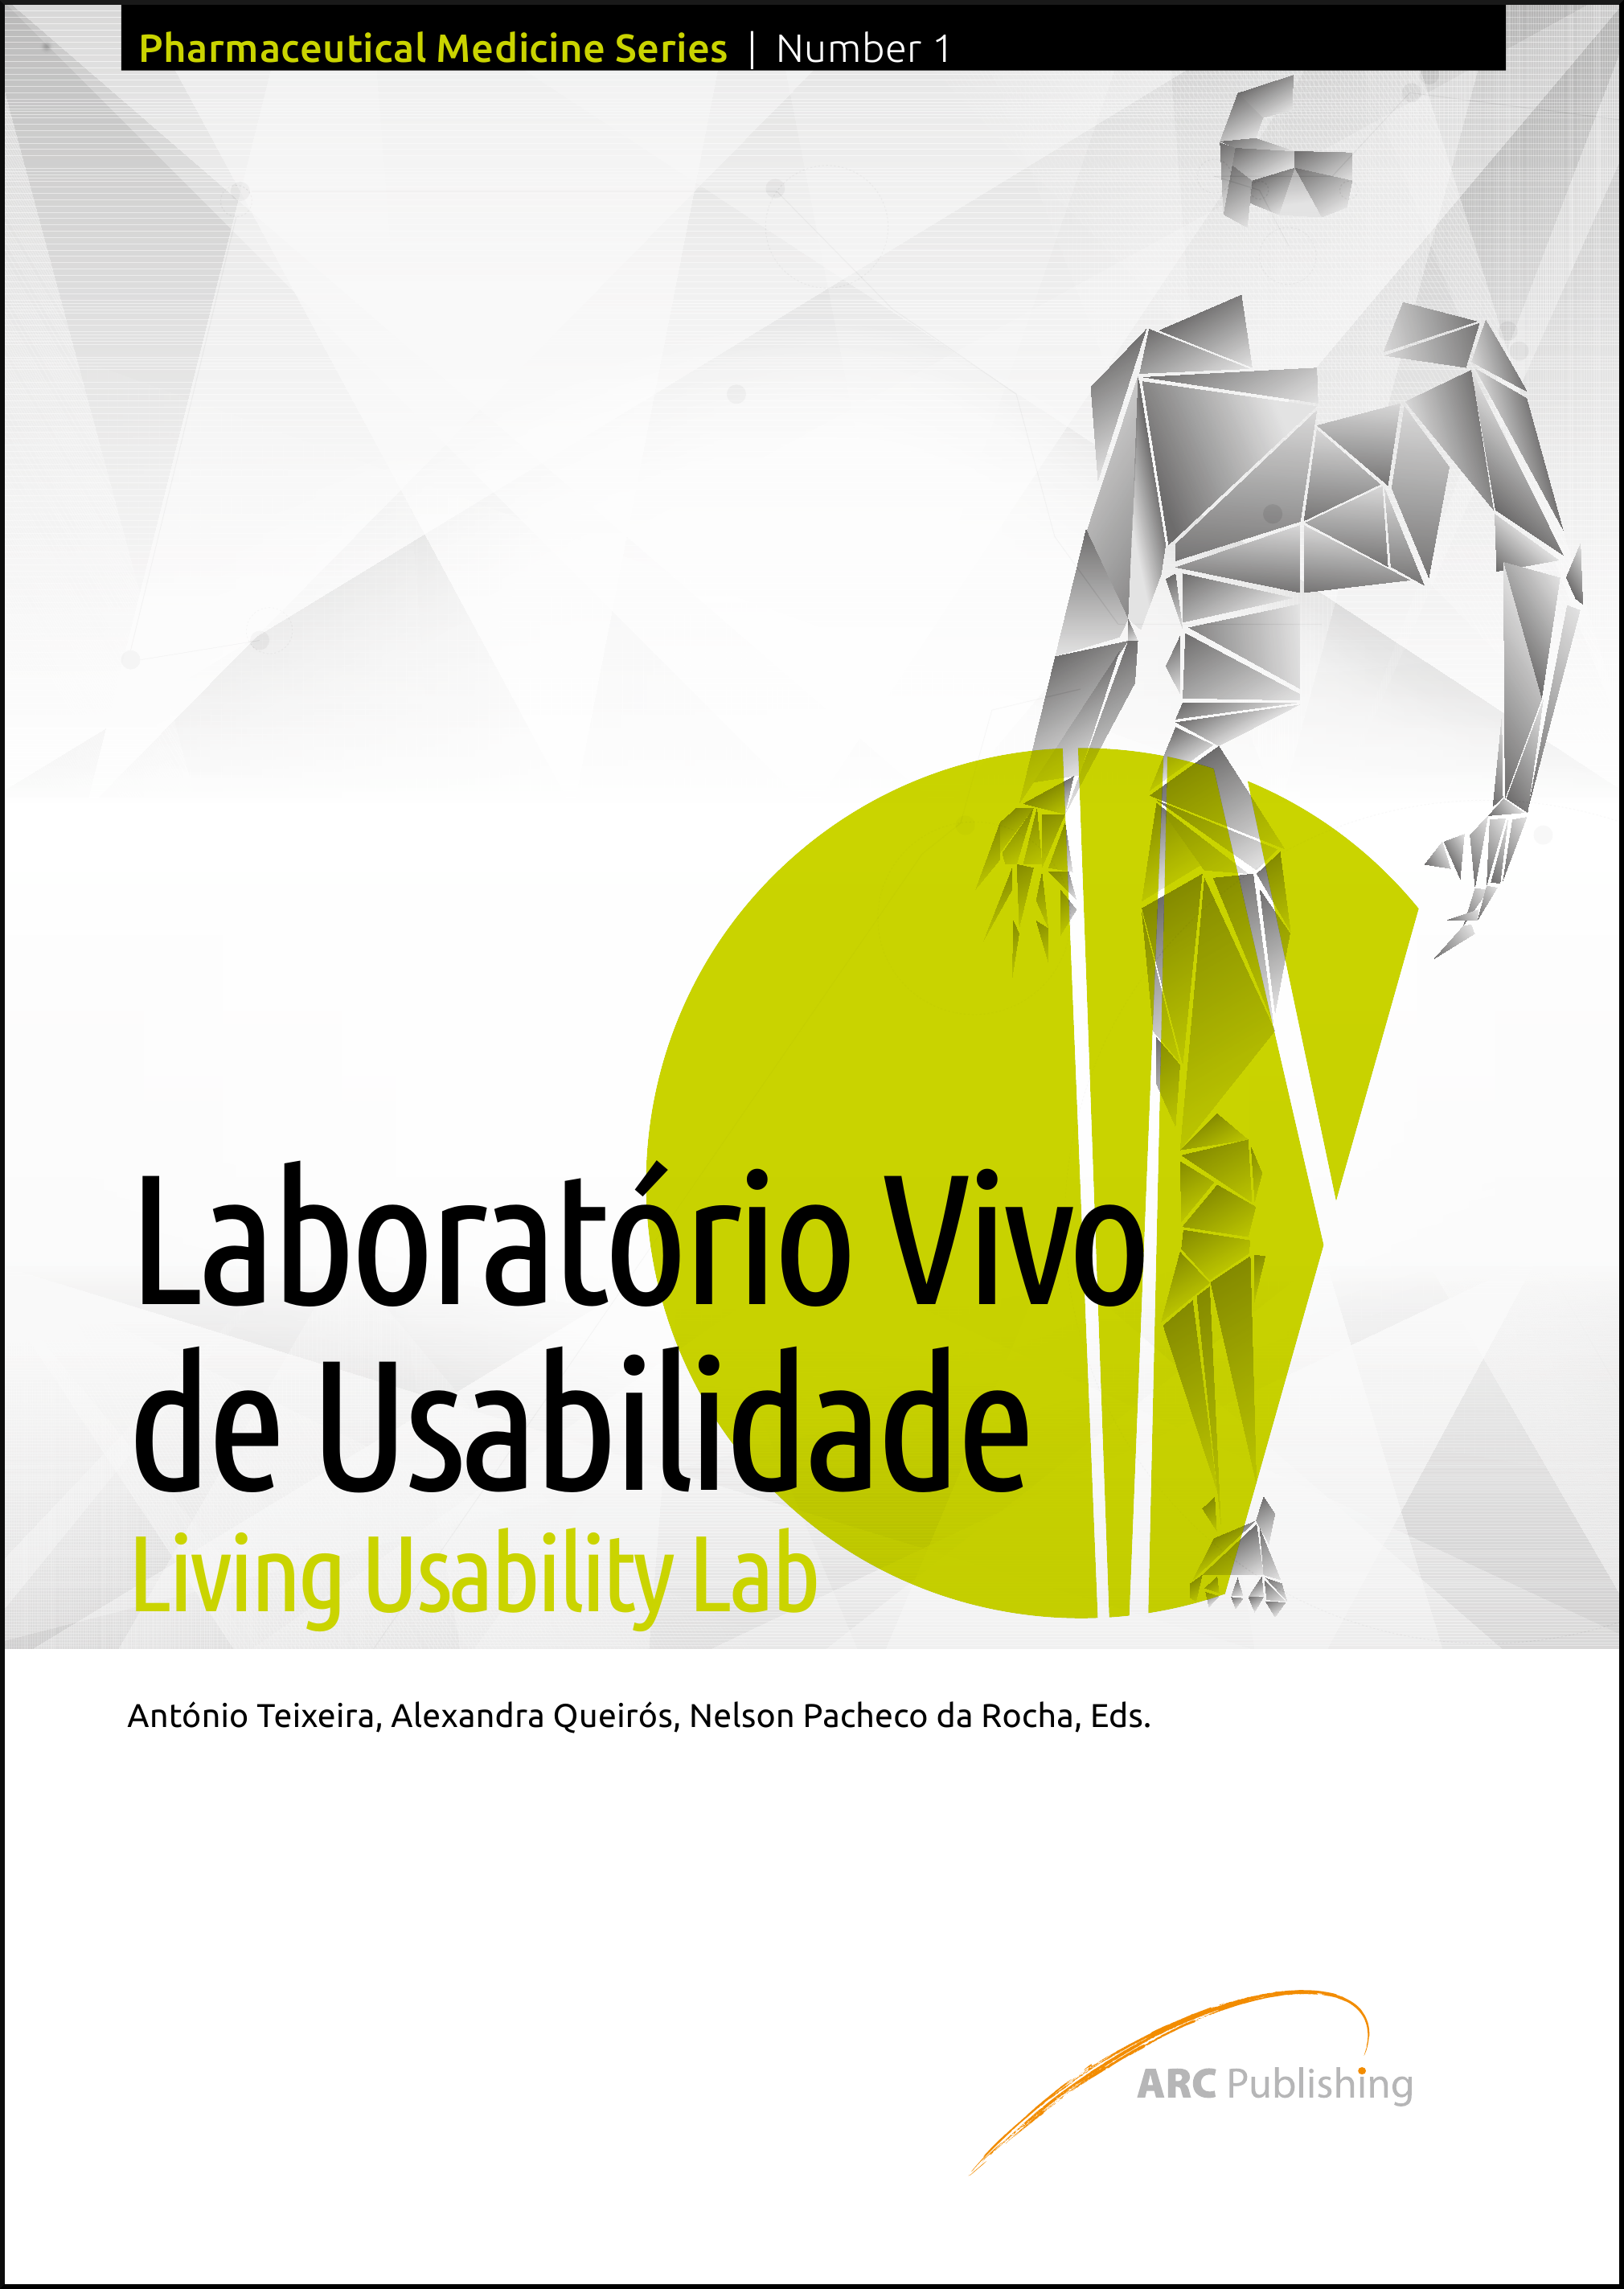 Living Usability Lab